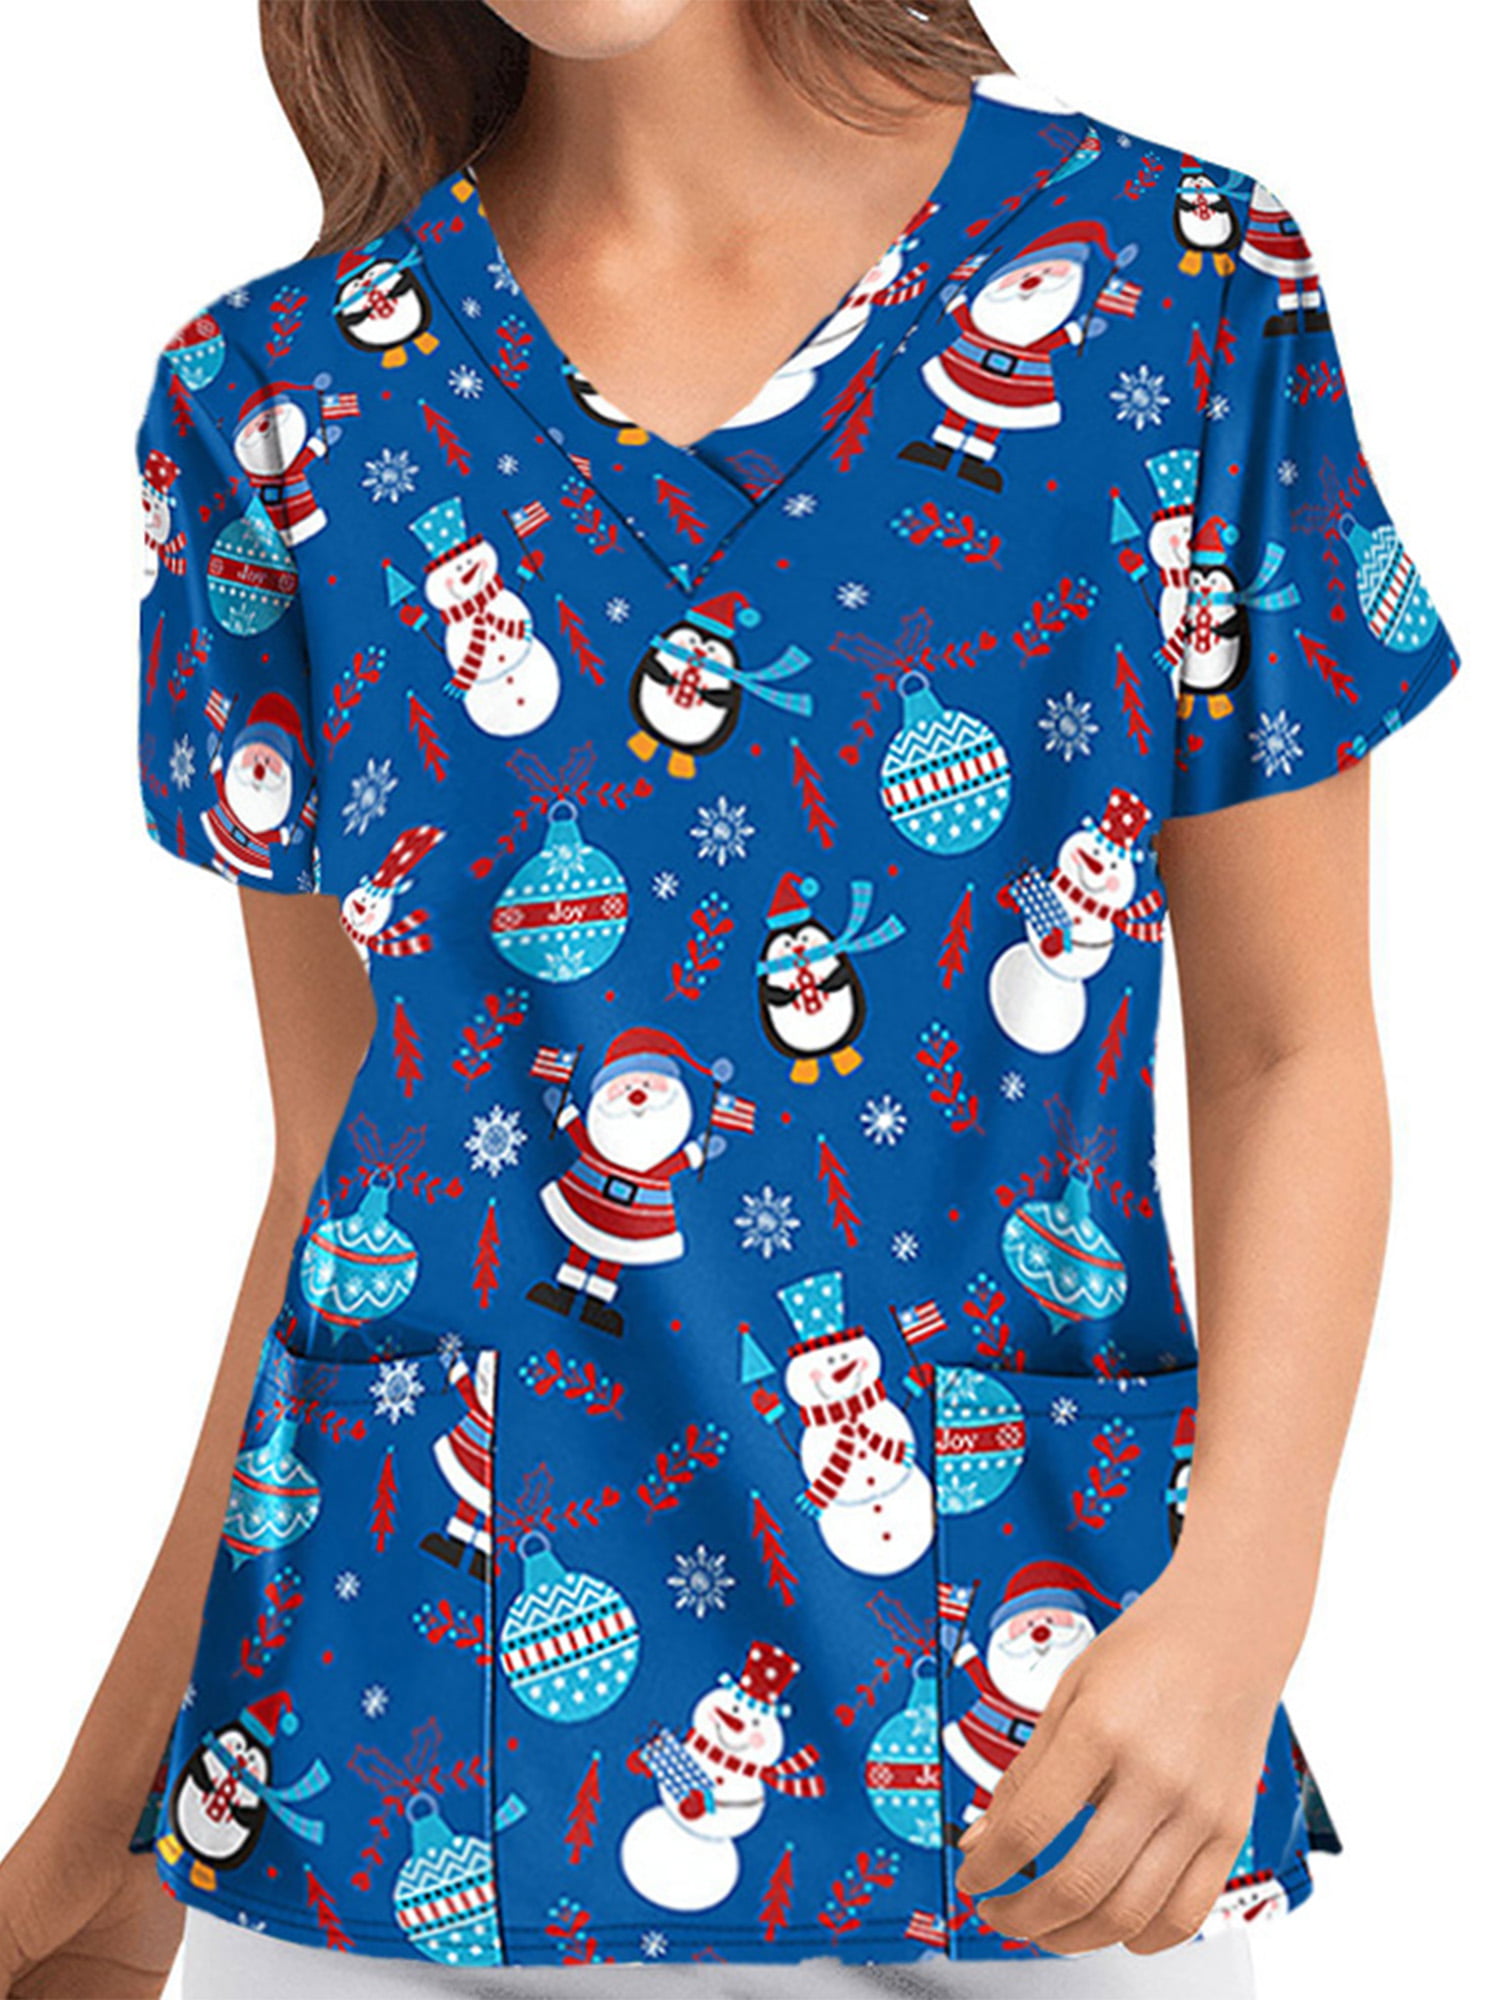 DressLksnf Christmas Nurse Scrubs,Women Snowflake Santa Print Uniform Tunic Top Shirt Women Nursing Snowman Print Hospital Workwear Fashion Plus Size Scrubs Uniforms Comfortable Loose Women Shirt